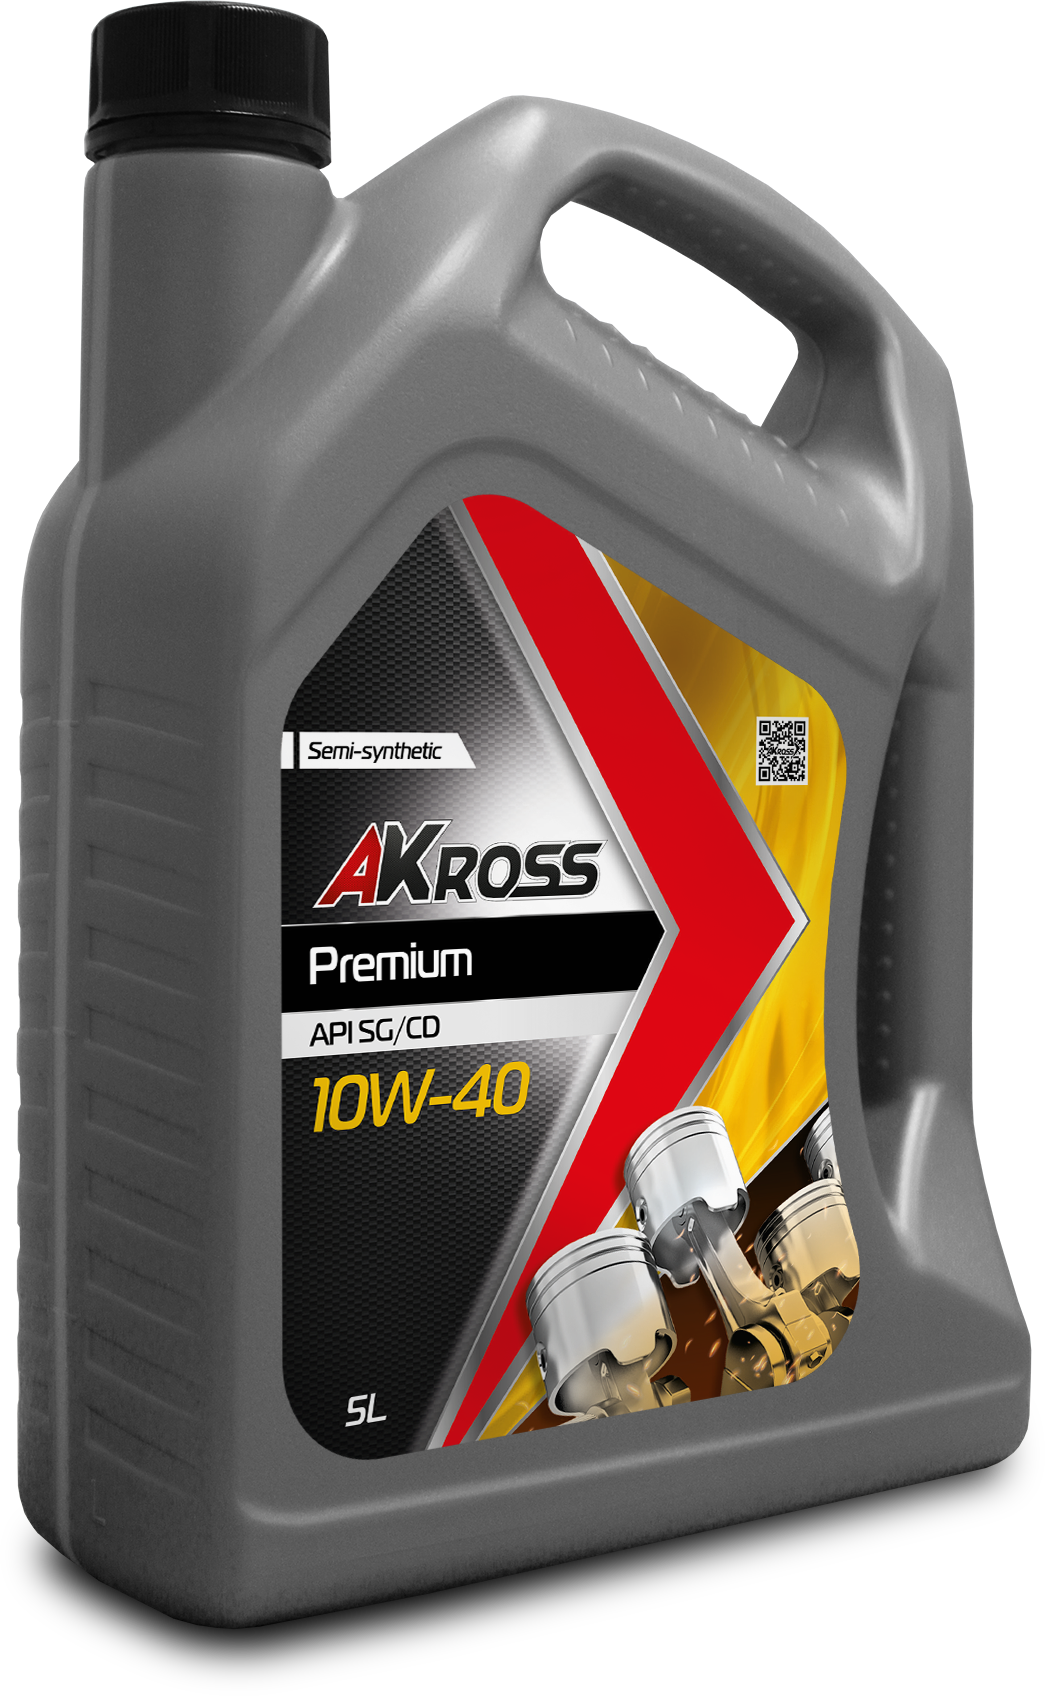 фото Akross моторное масло akross 10w-40 premium sg/cd 5 л бензин